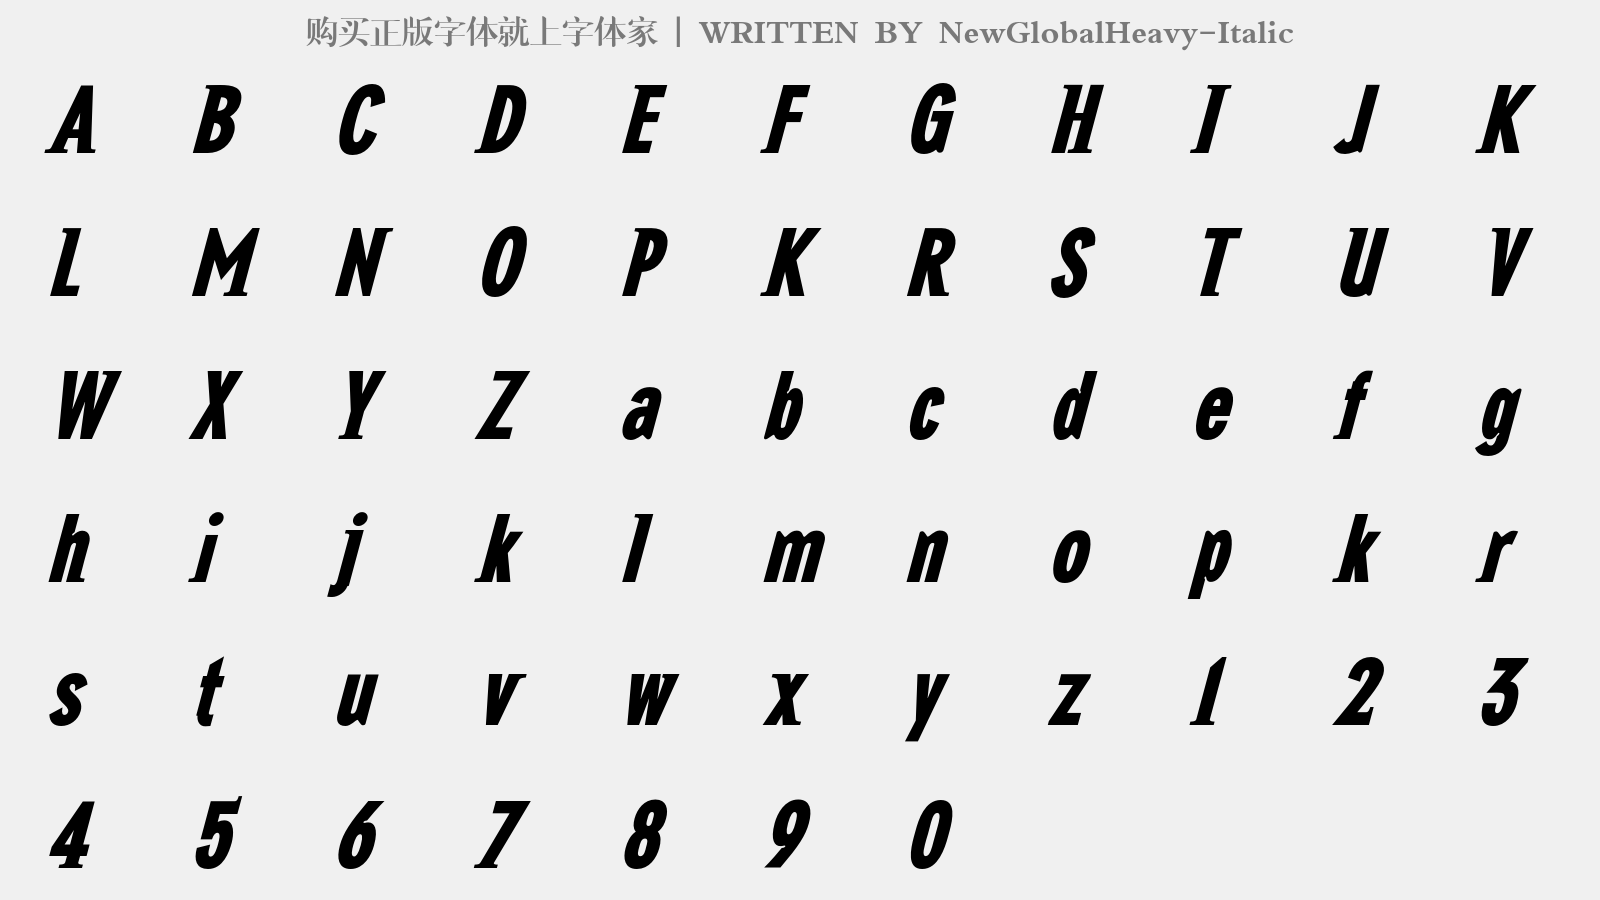 NewGlobalHeavy-Italic - 大写字母/小写字母/数字